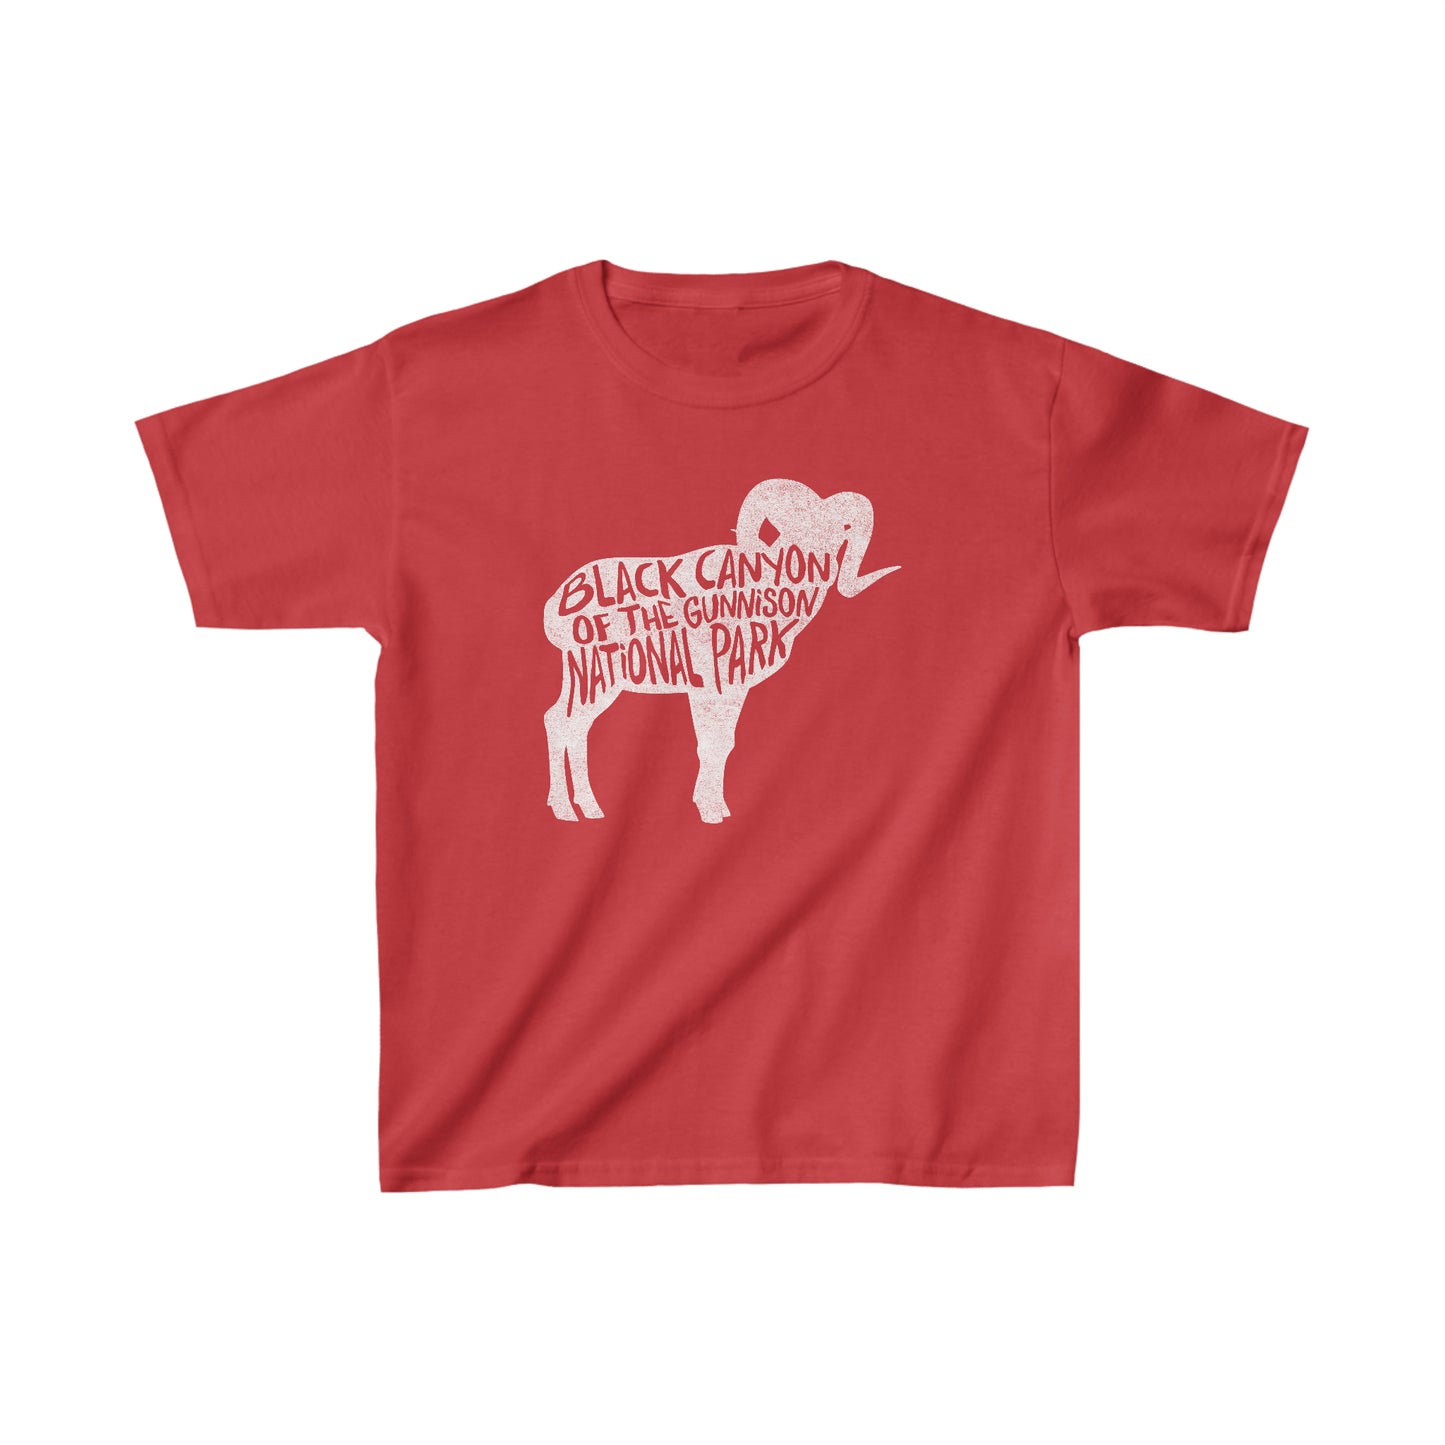 Black Canyon of the Gunnison National Park Child T-Shirt - Bighorn Sheep